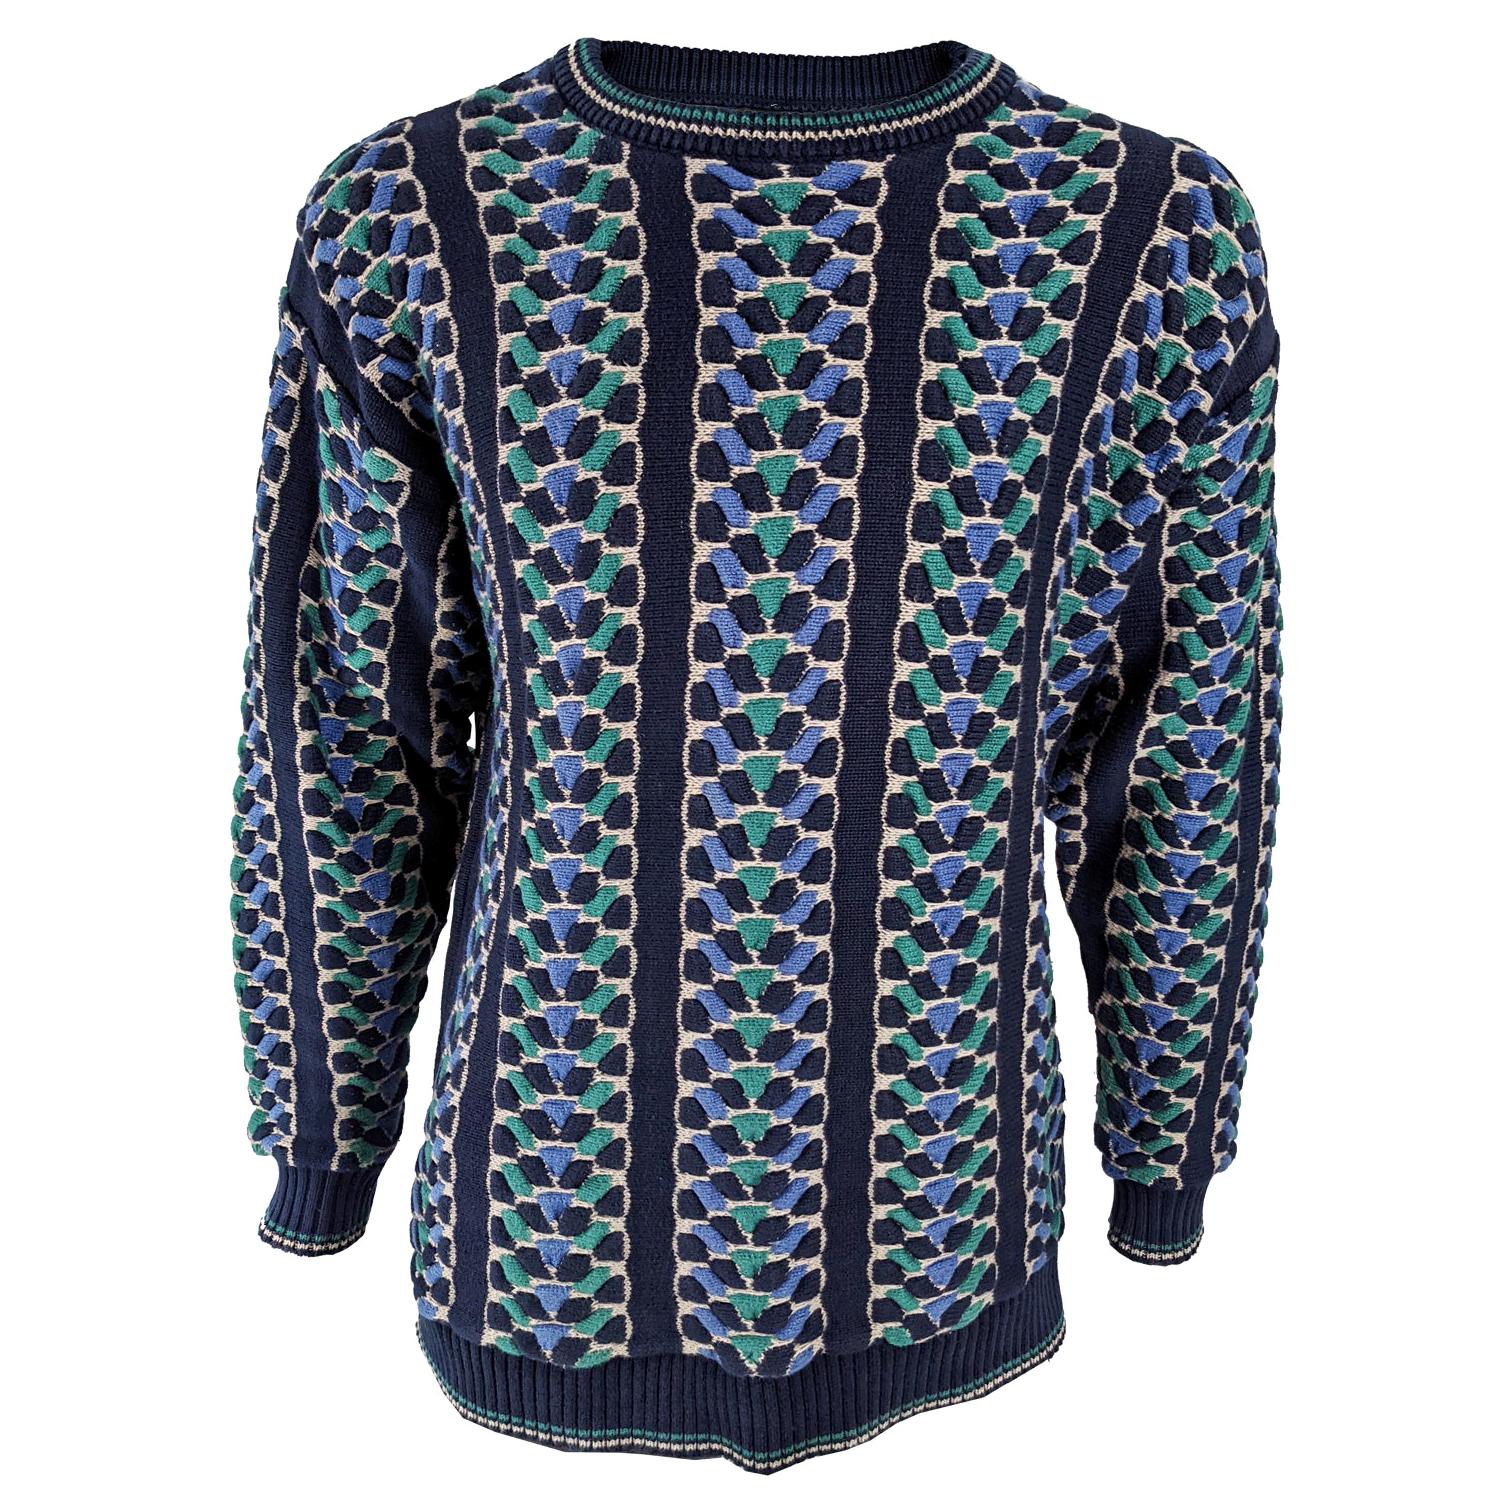 1940s Authentic Vintage Replica Socialite "Blue Mountain" Knit Long Sleeve Sweater in Navy Blue Ropa Ropa para hombre Jerséis Chalecos de punto Retro Men's Knitwear Fair Isle Jumper 